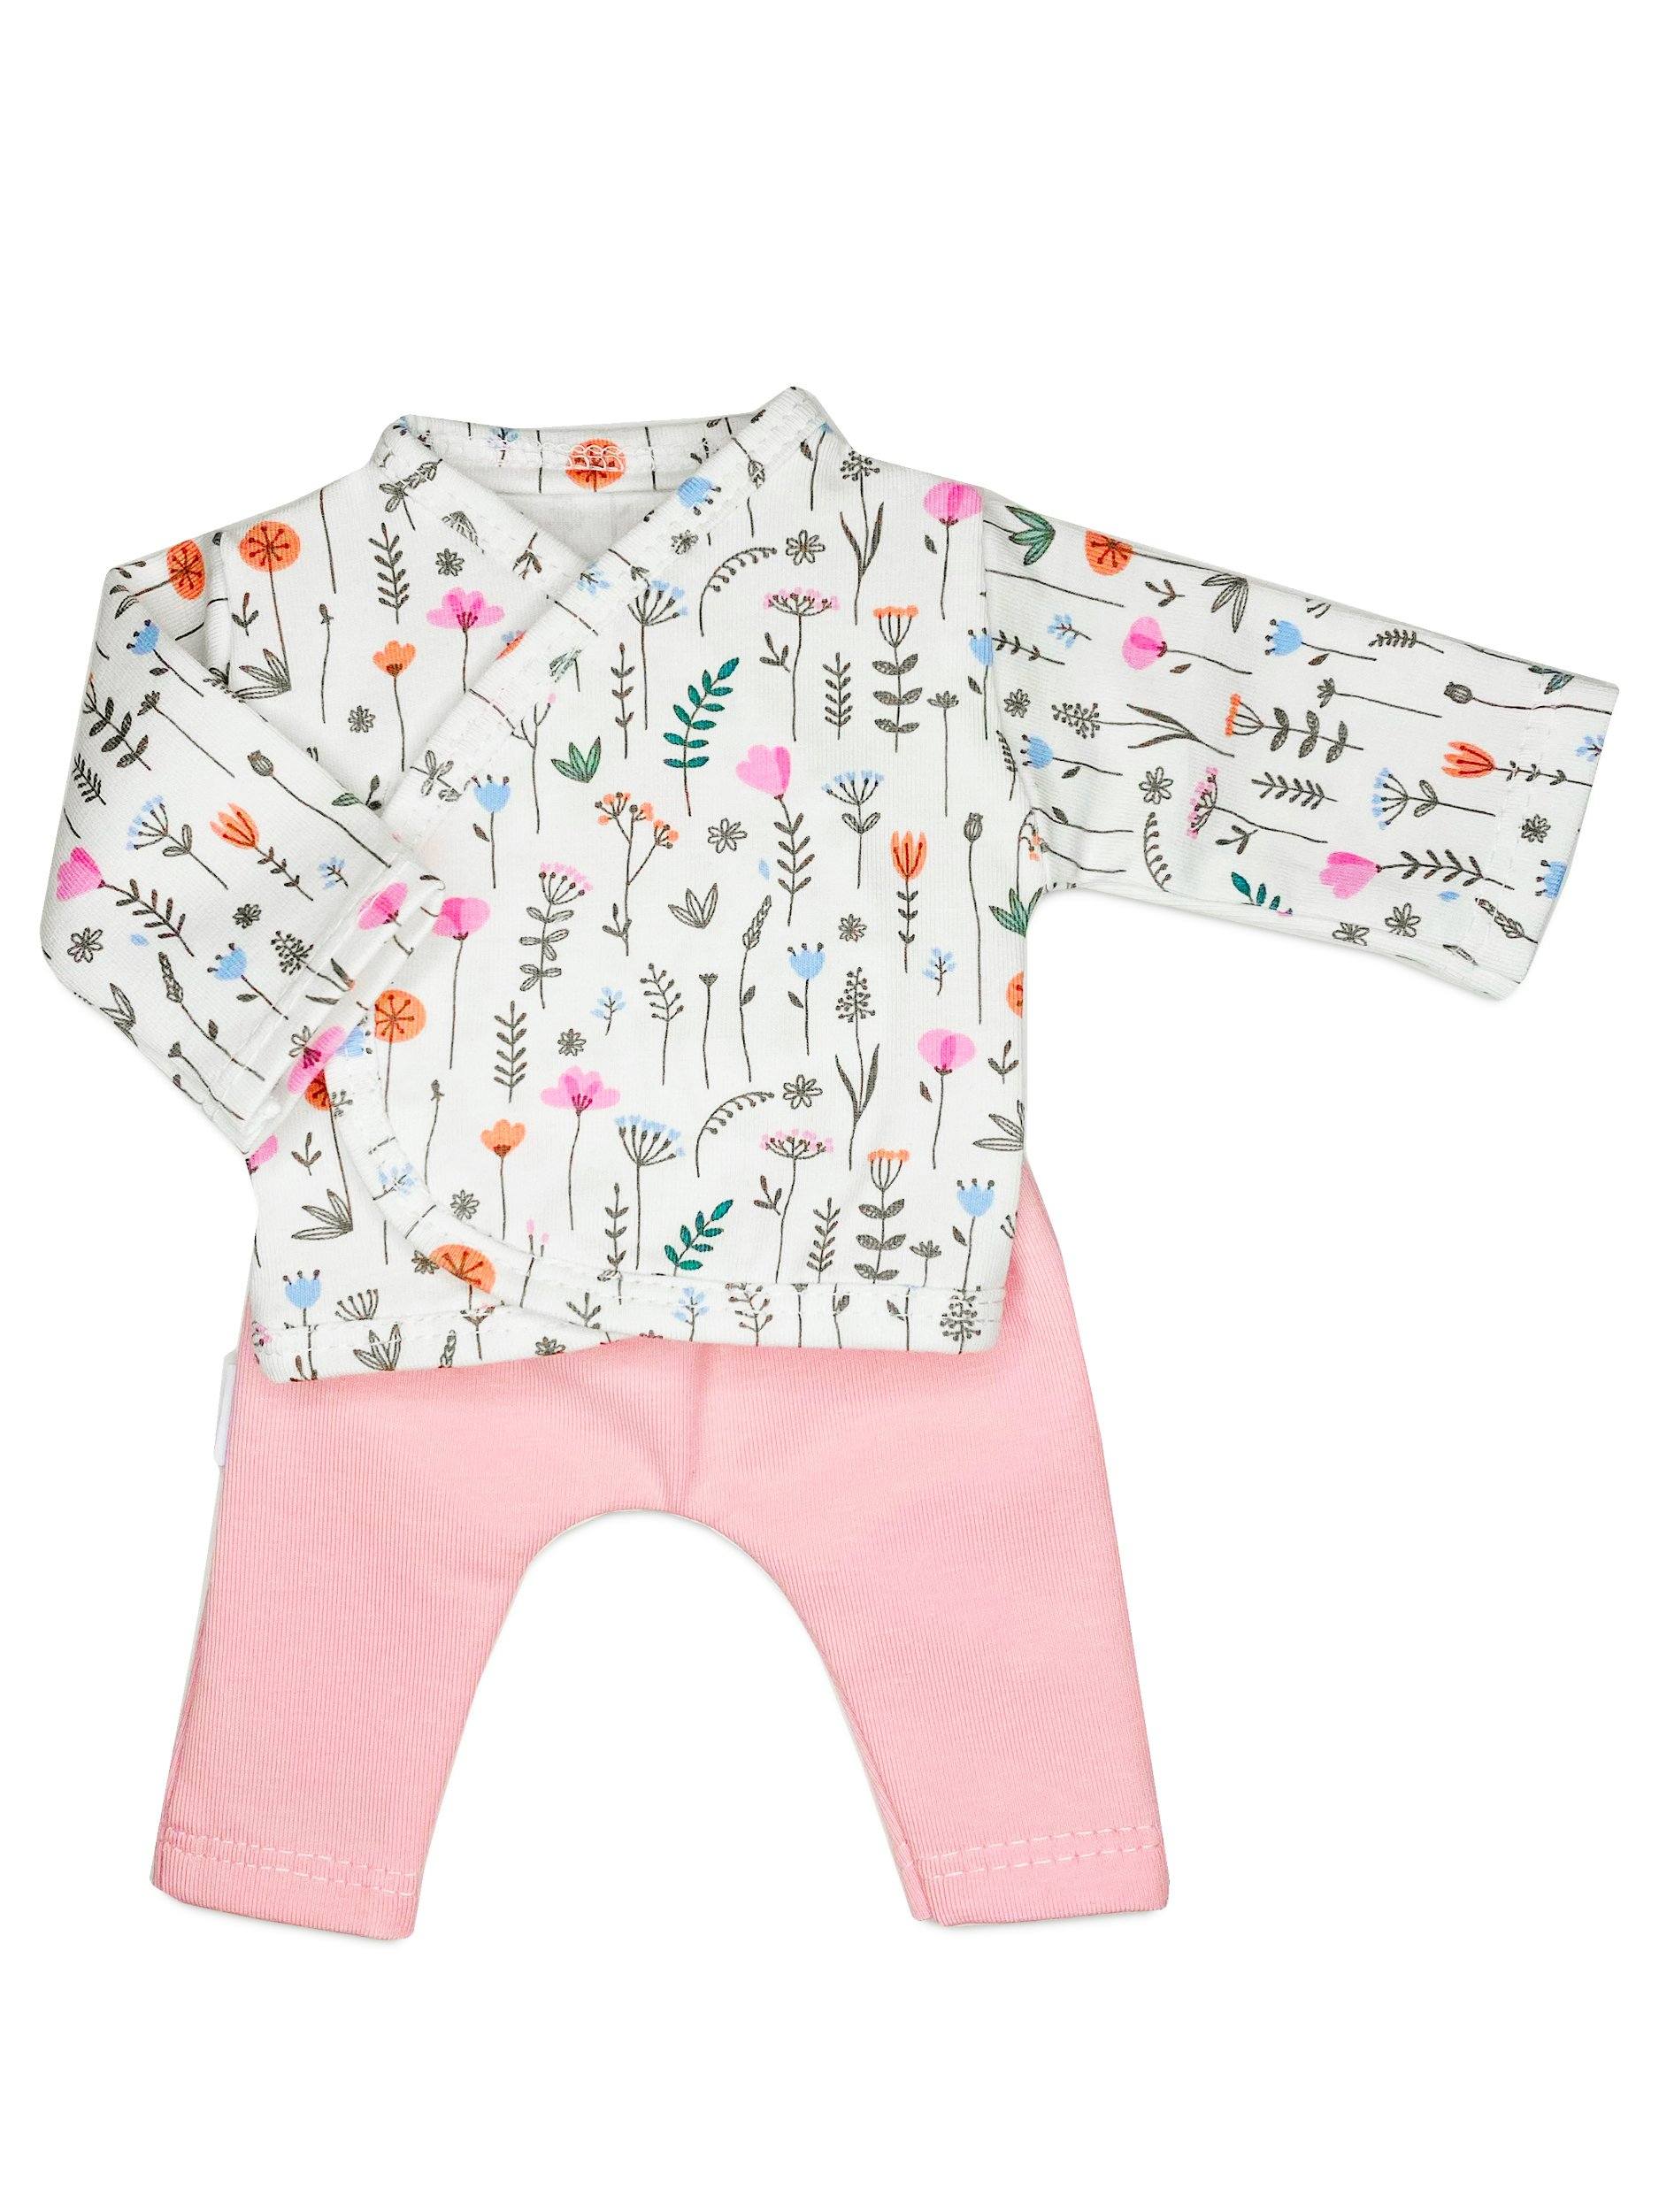 Preemie Clothes, Top & Trouser Set, Wildflowers & Pink - Set - Little Lucas